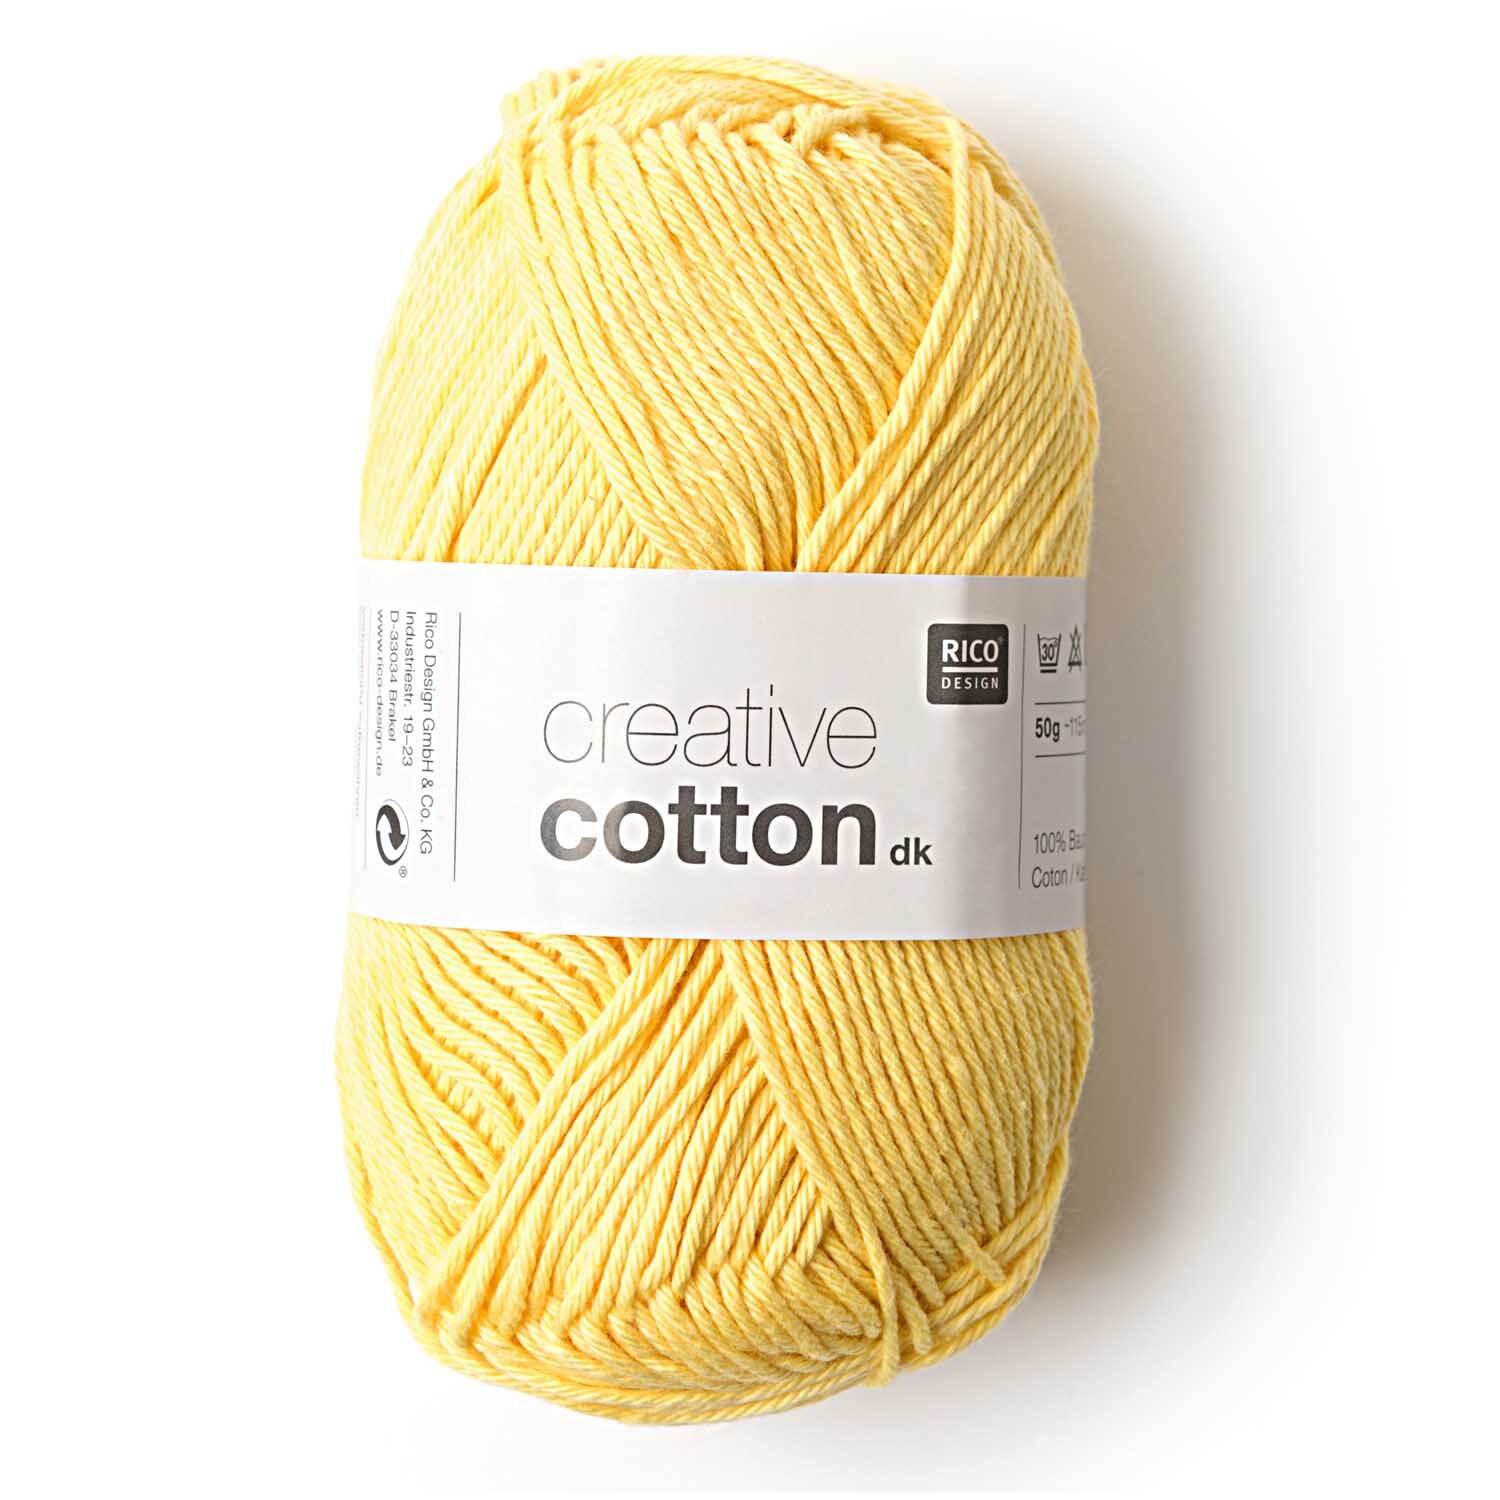 Creative Cotton dk